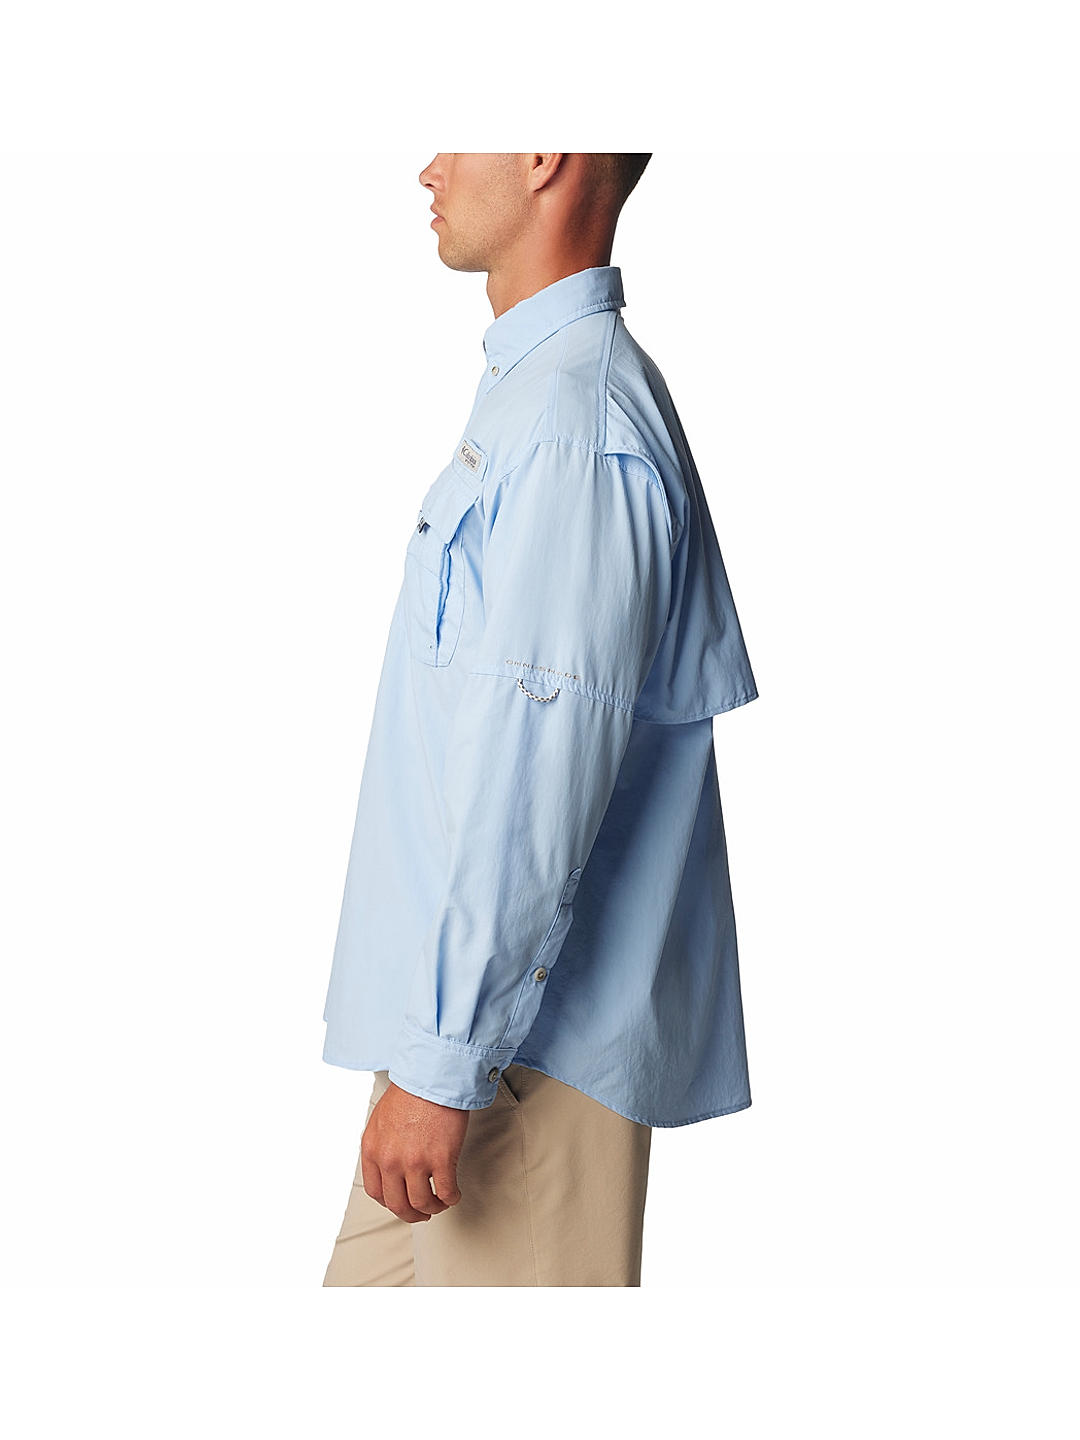 Buy Blue Bahama II L/S Shirt for Men Online at Columbia Sportswear